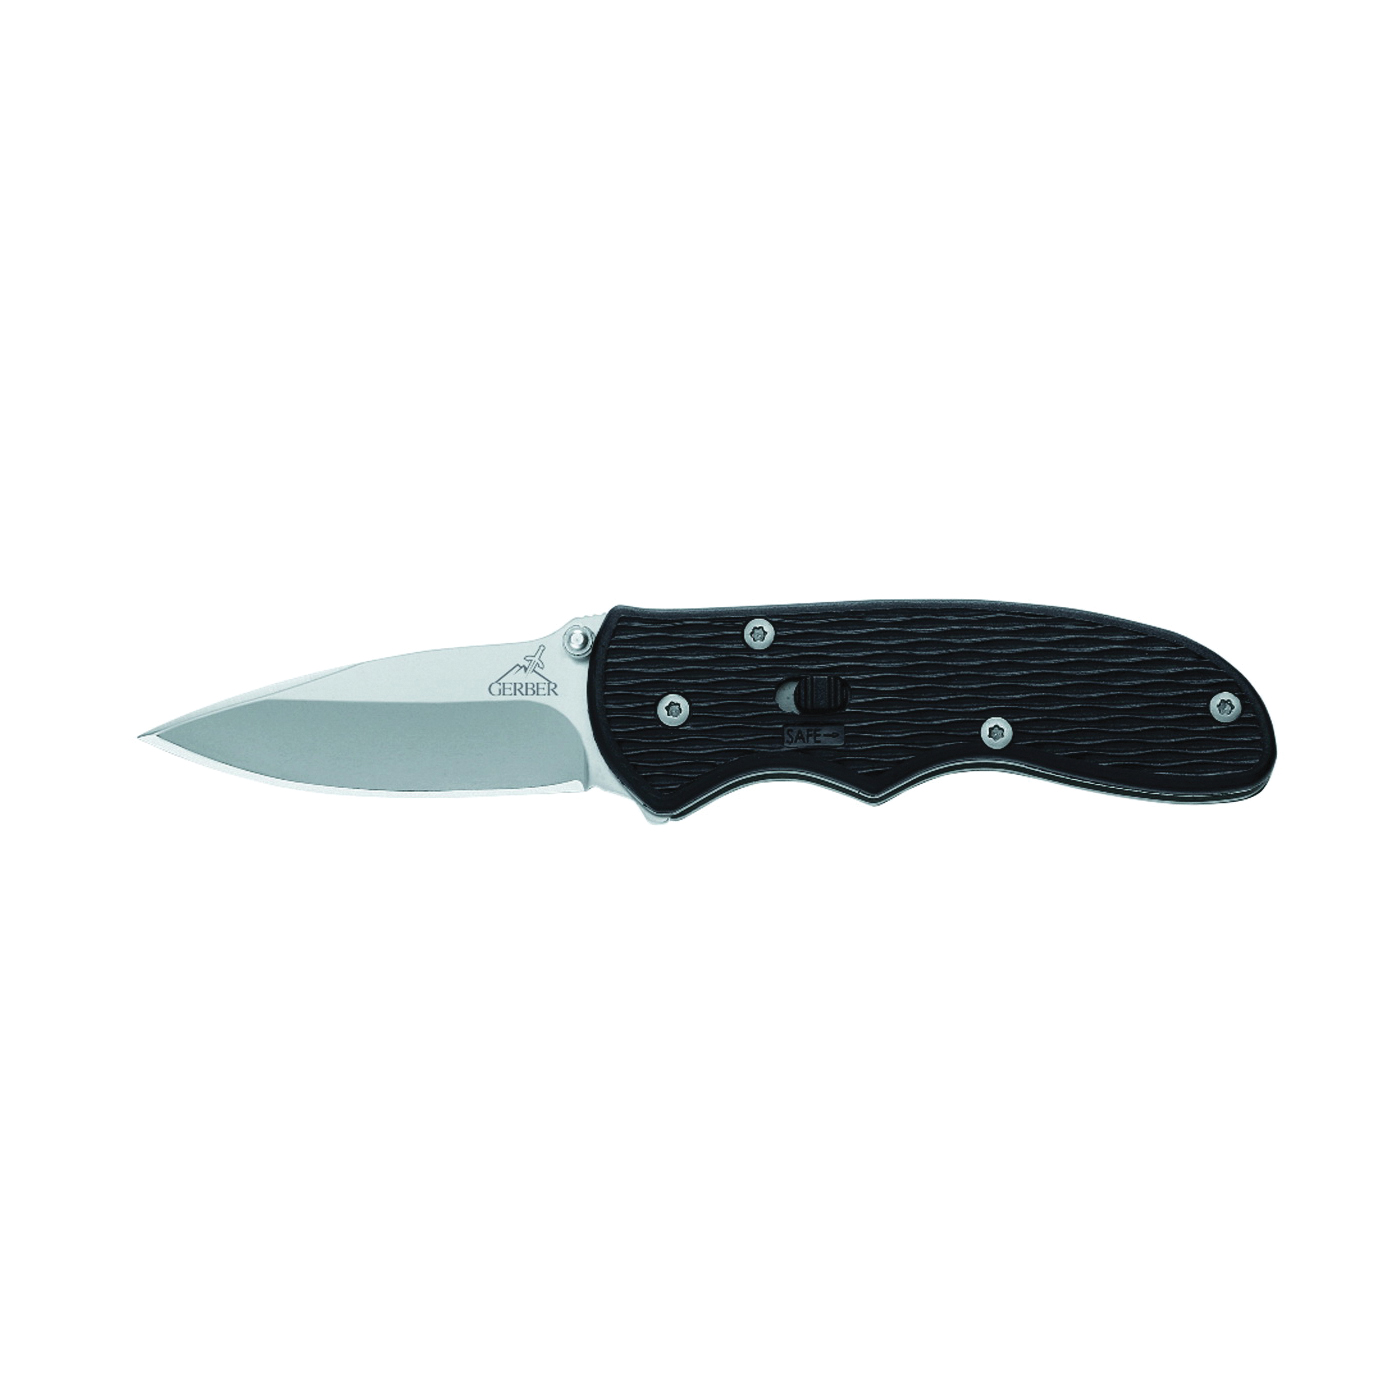 22-41526 Folding Knife, 2.1 in L Blade, HCS Blade, 1-Blade, Textured Handle, Black Handle